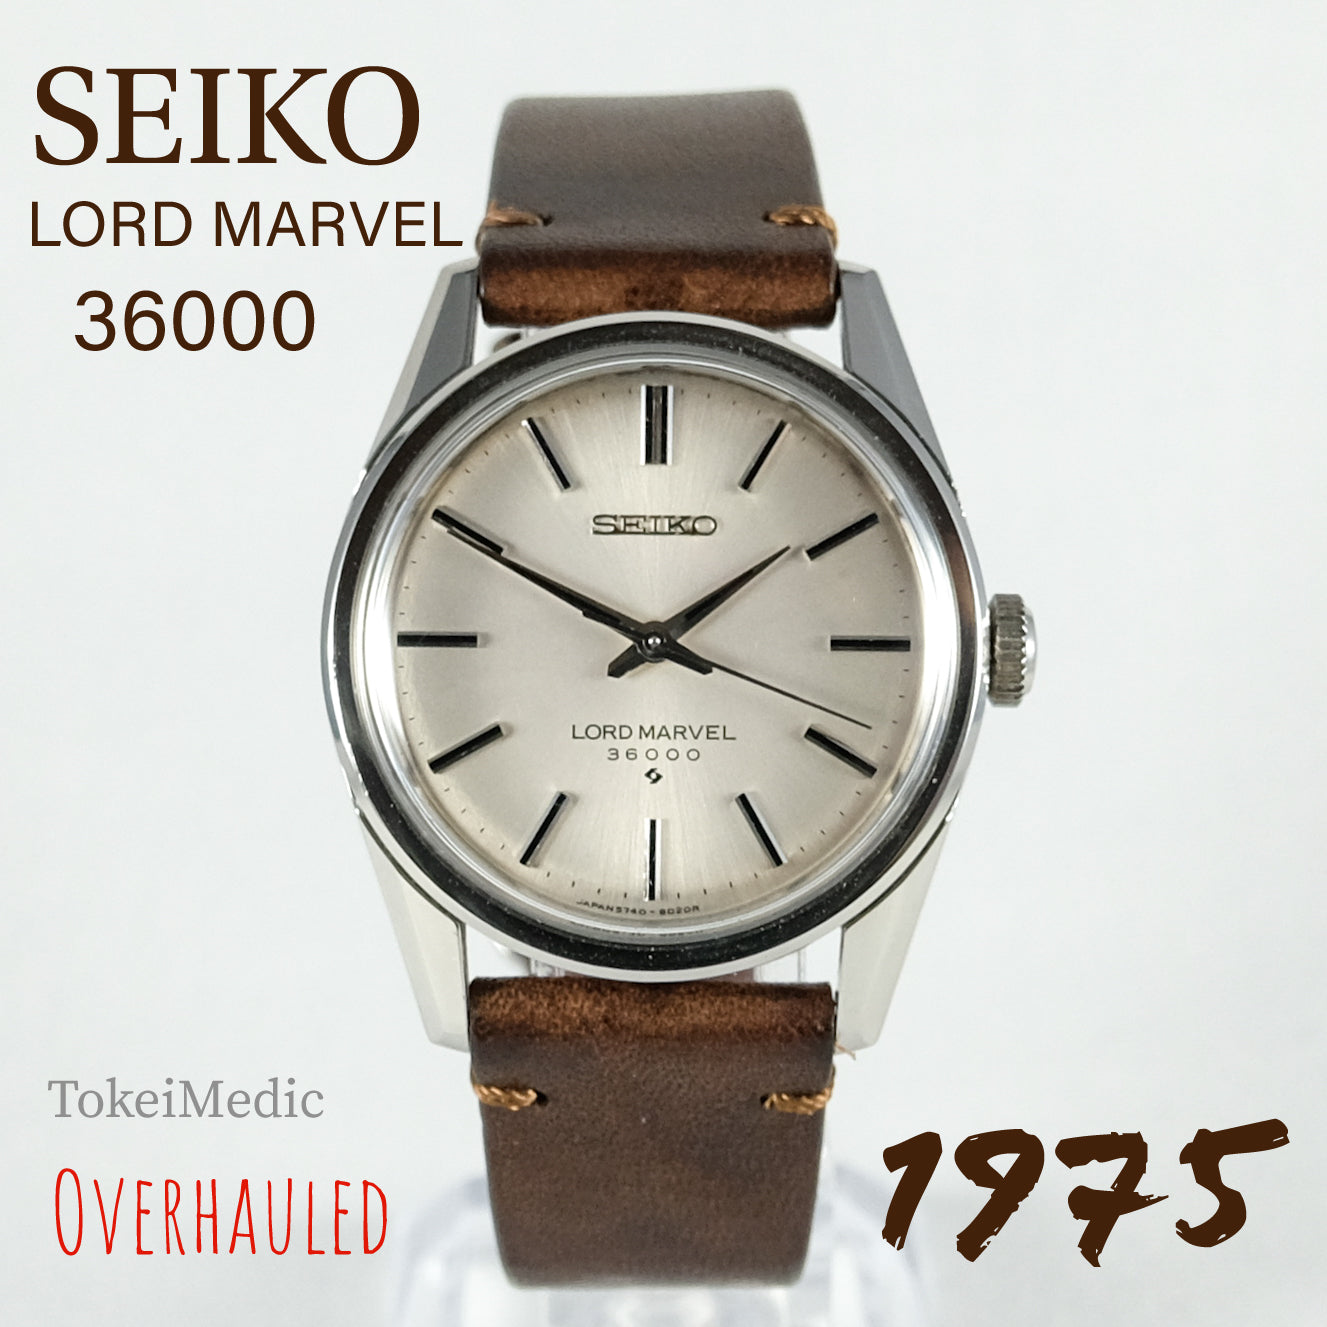 1975 Seiko Lord Marvel 36000 5740-8000